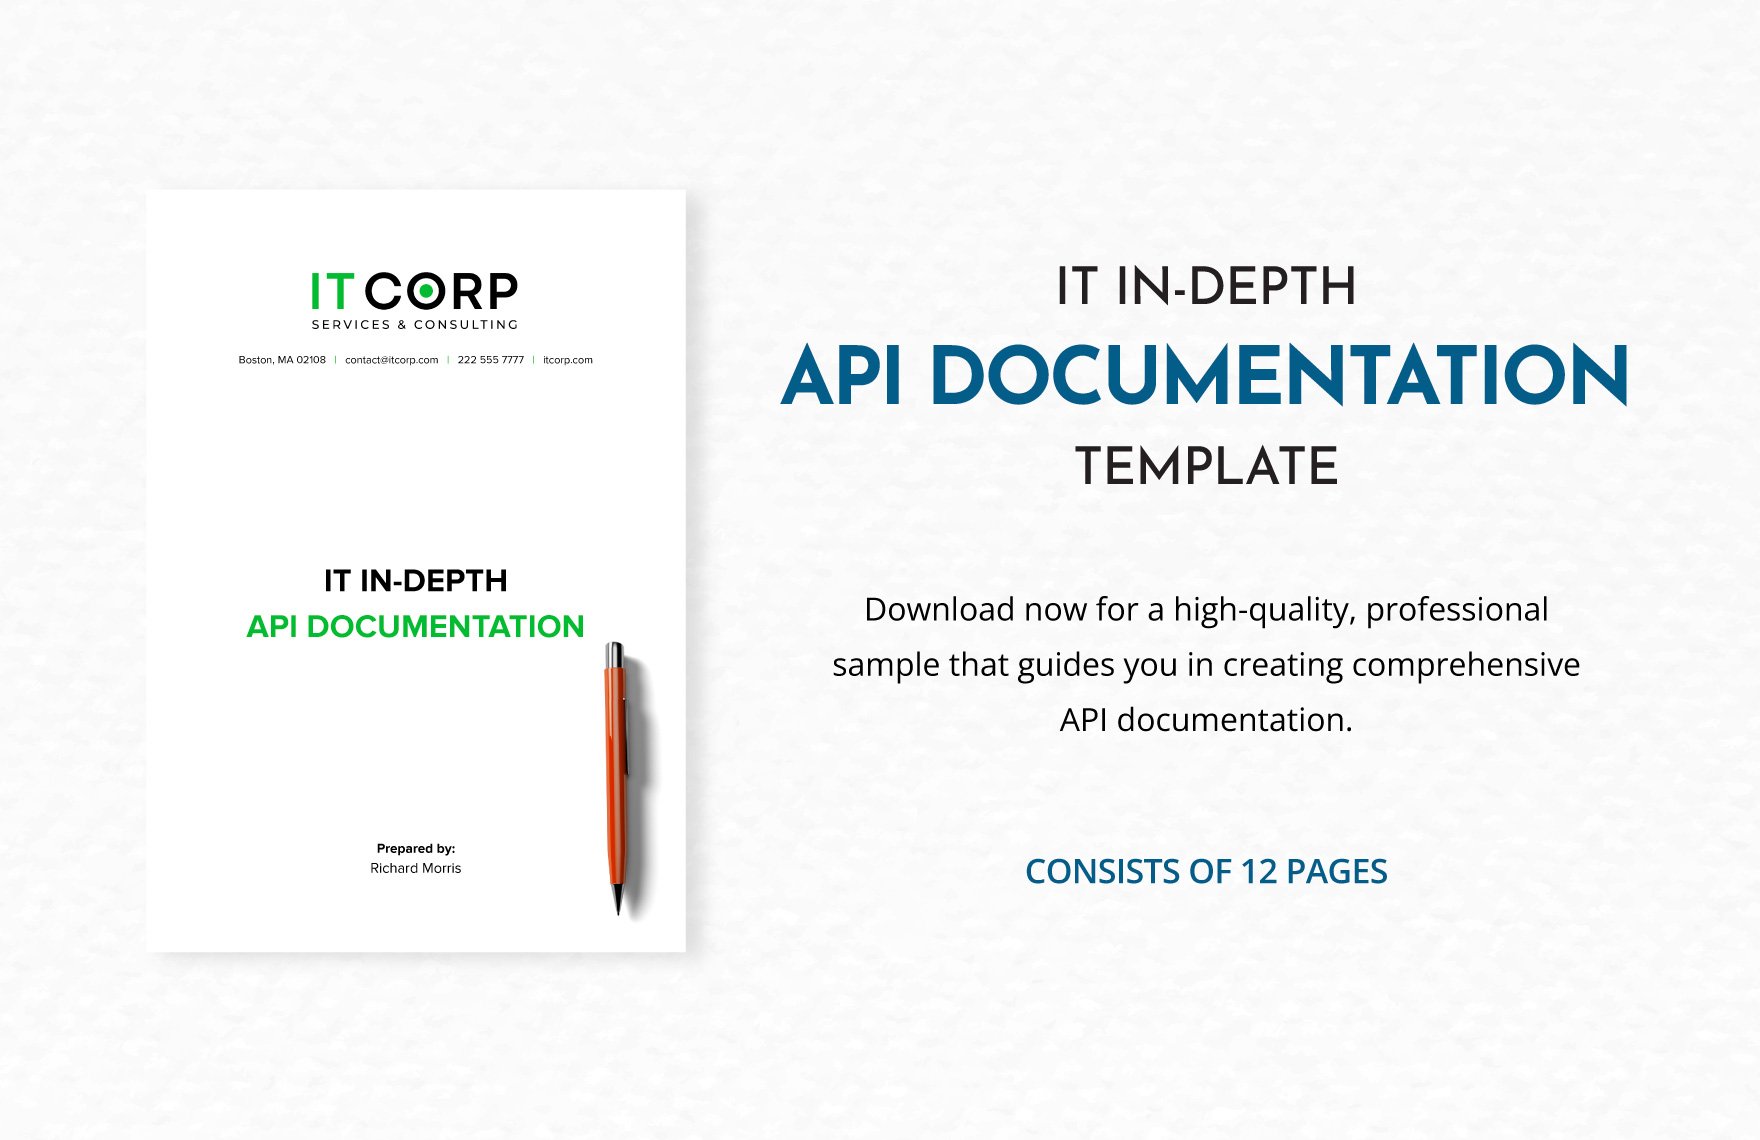 IT In-depth API Documentation Template